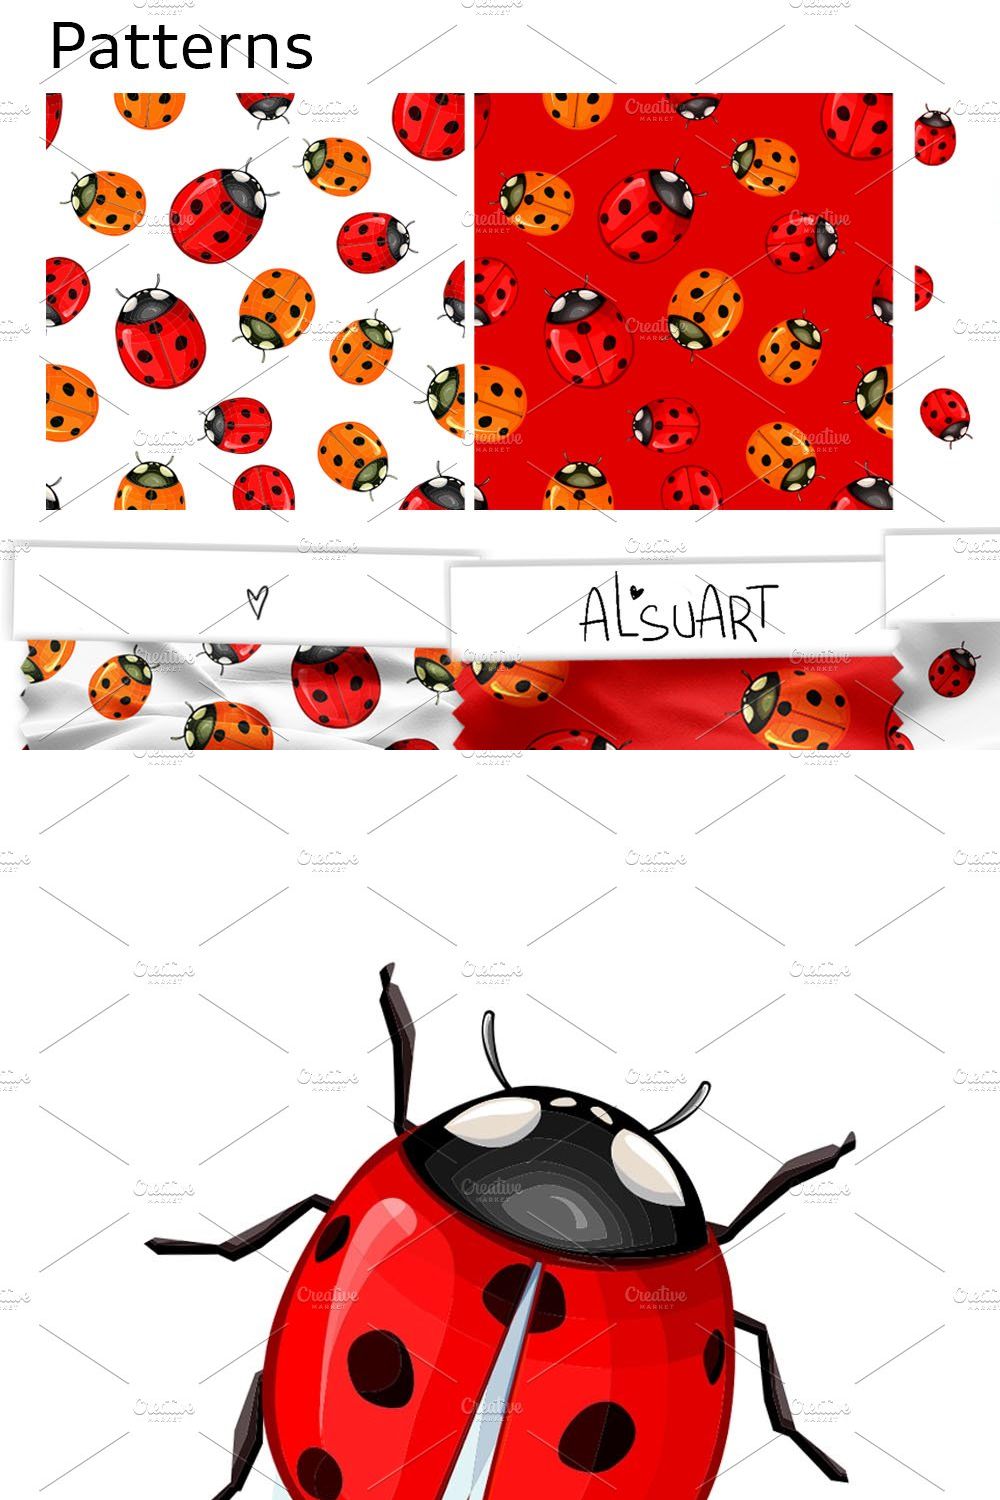 Ladybug pinterest preview image.